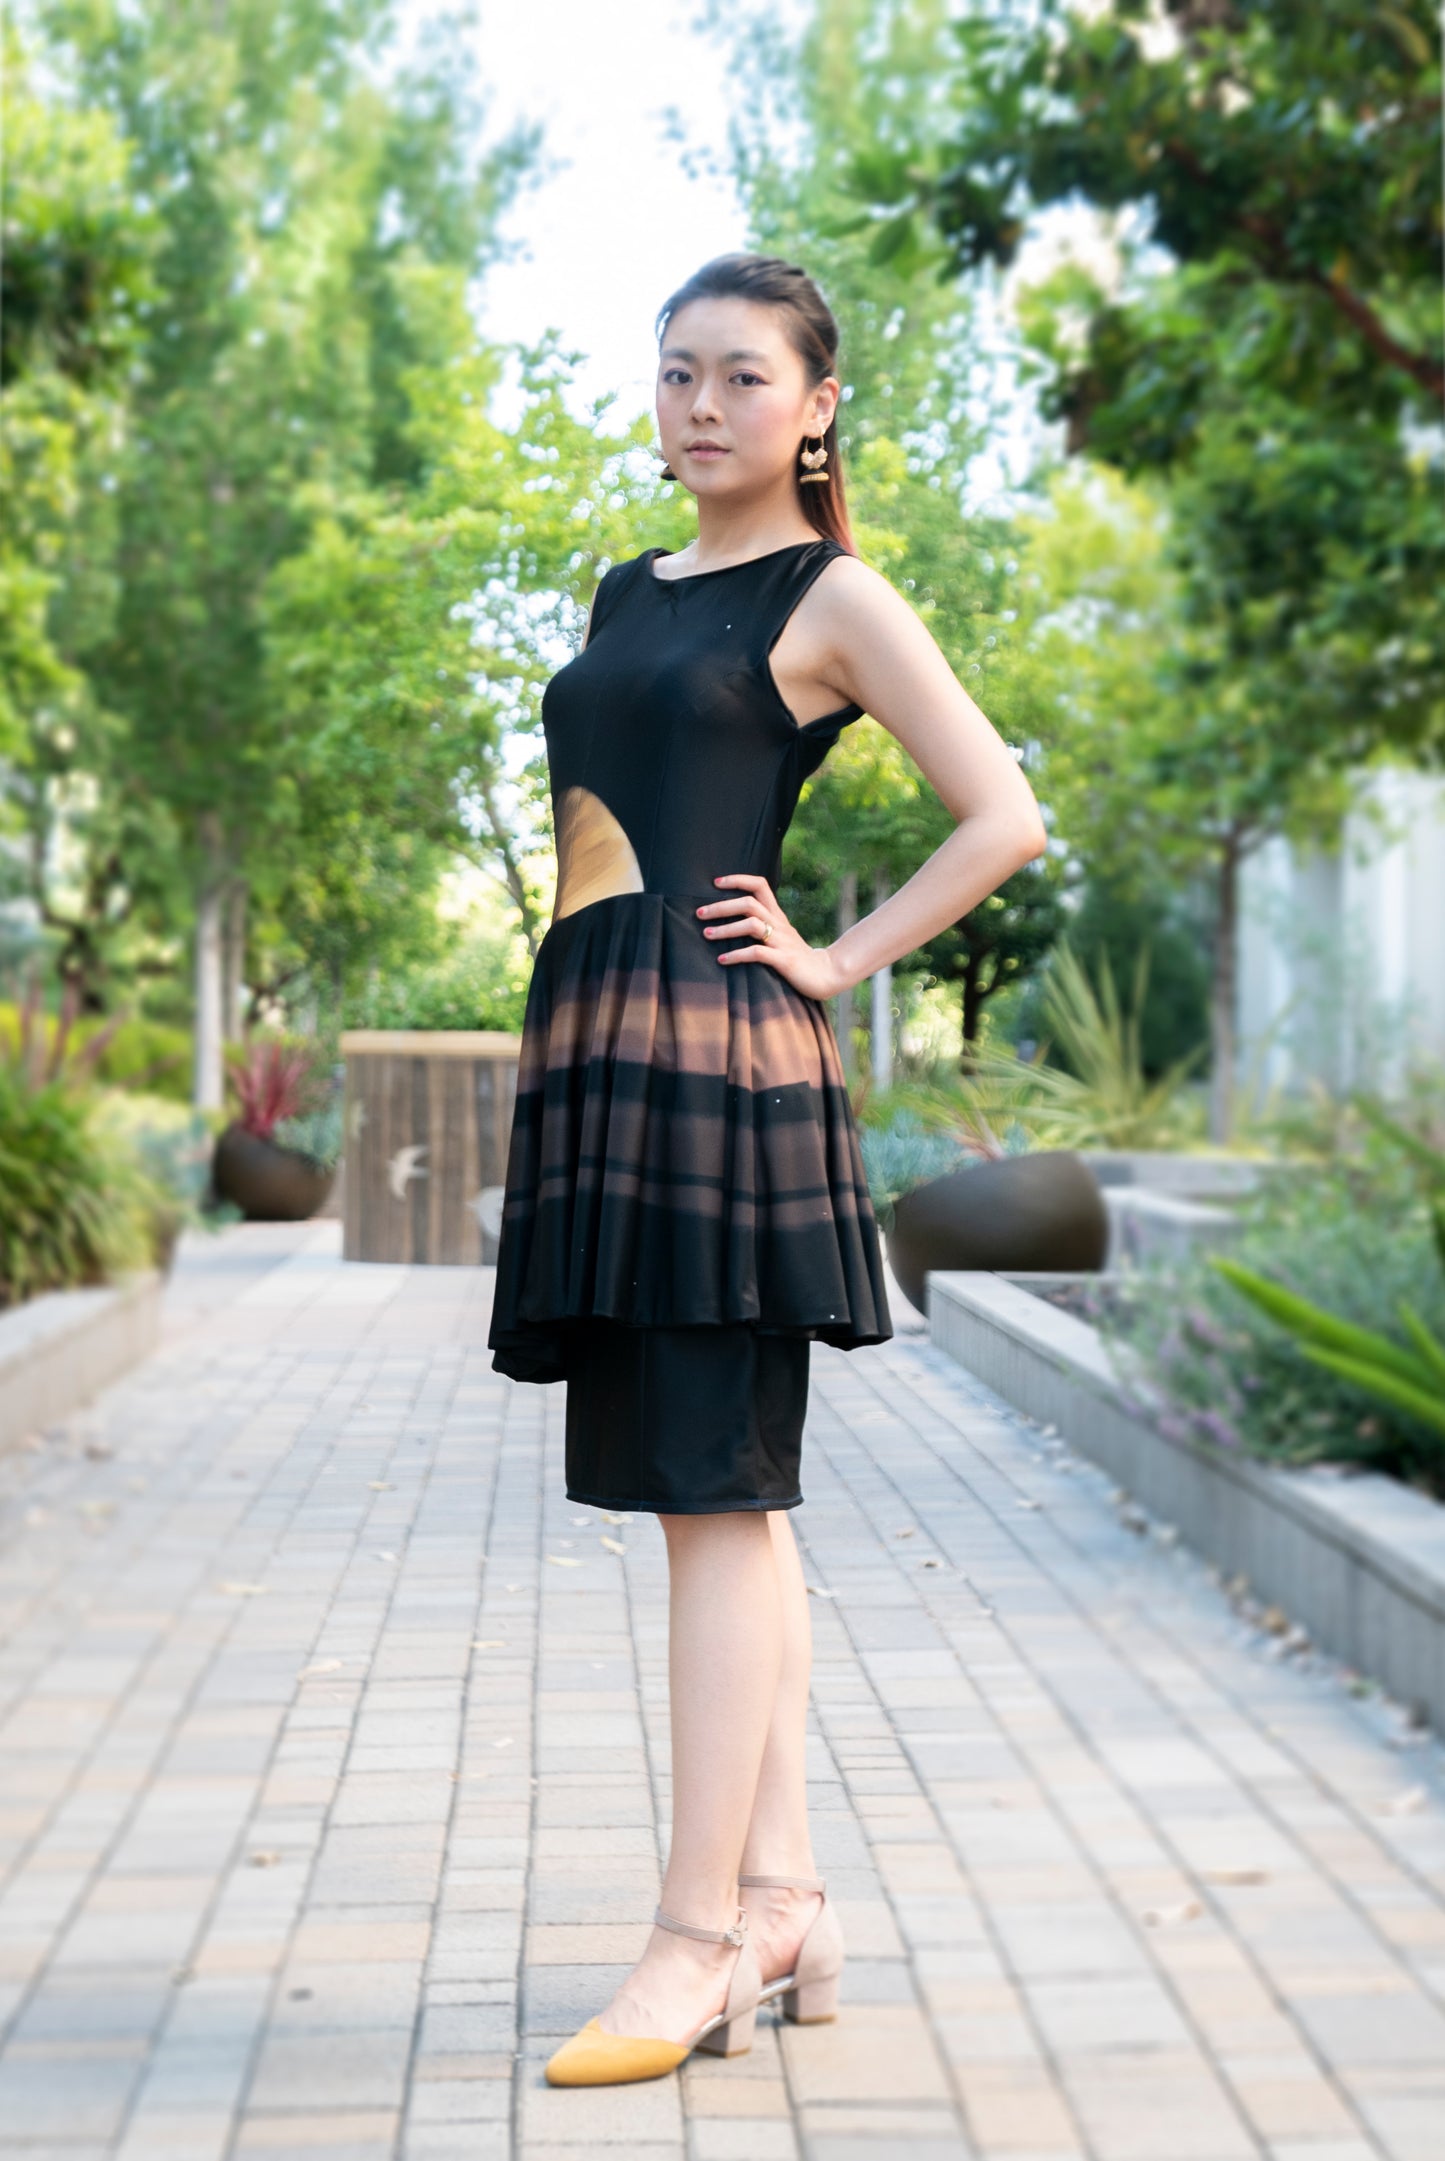 Saturn dress DIY fabric patterns